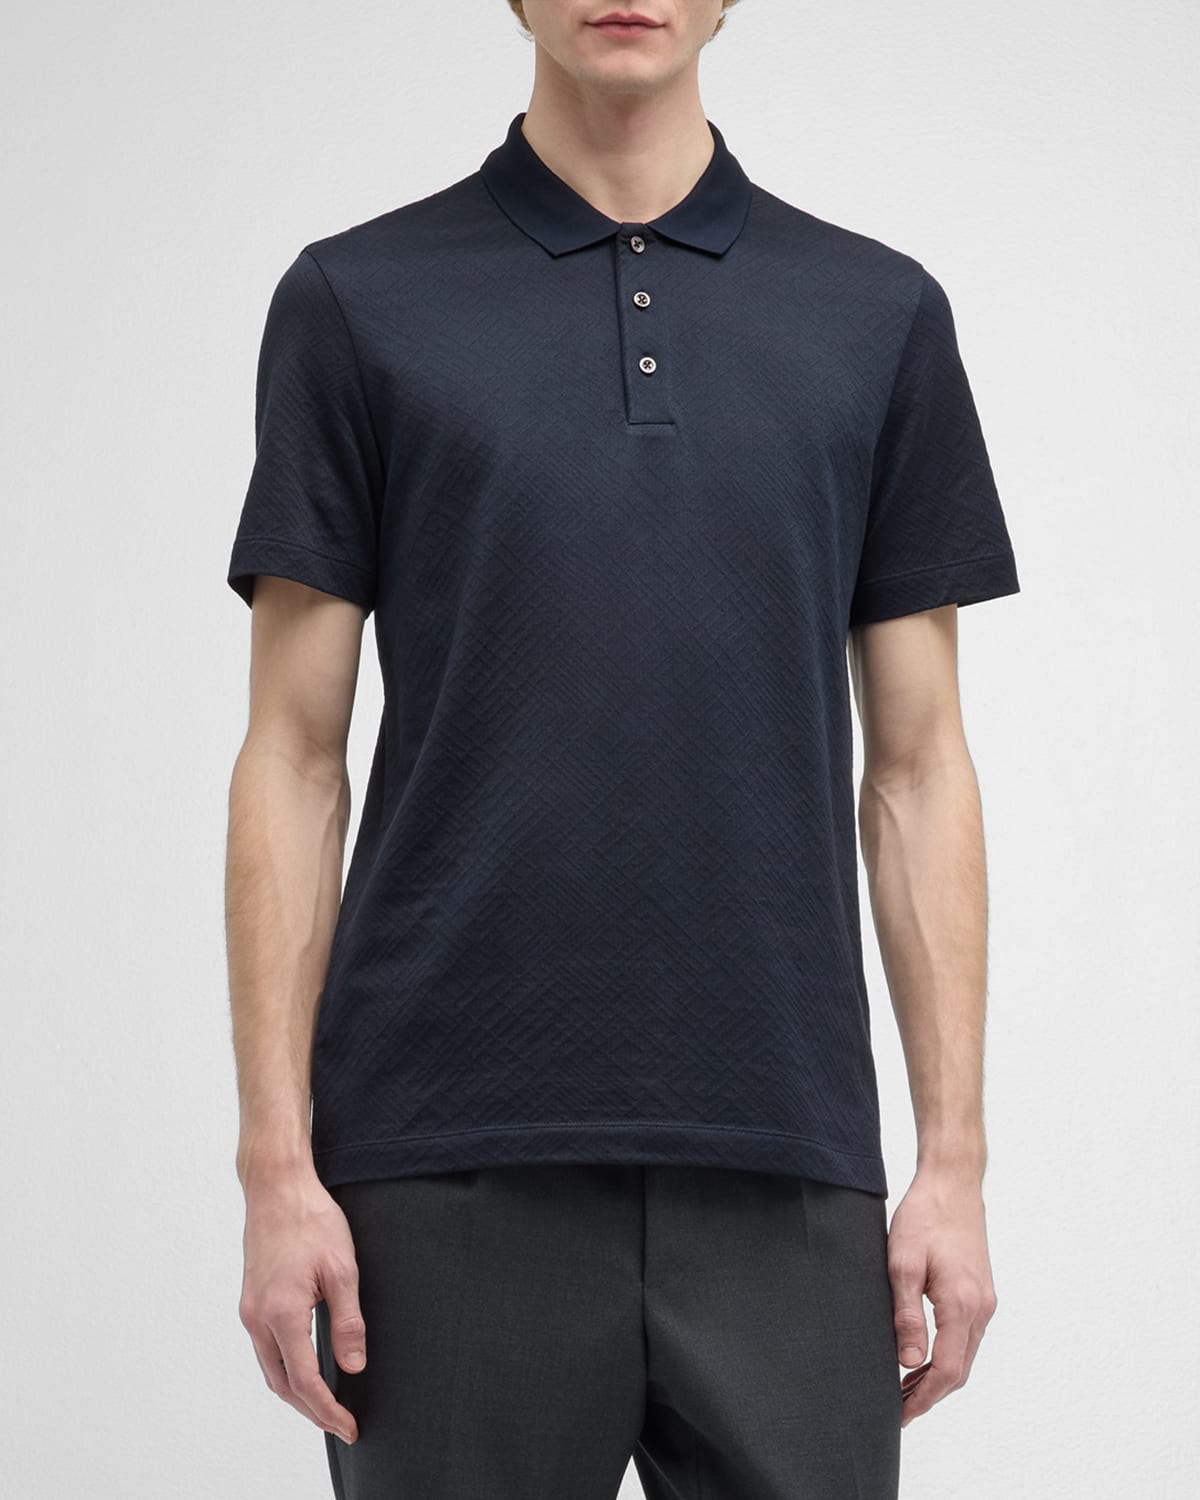 Men's Cotton Jacquard Polo Shirt